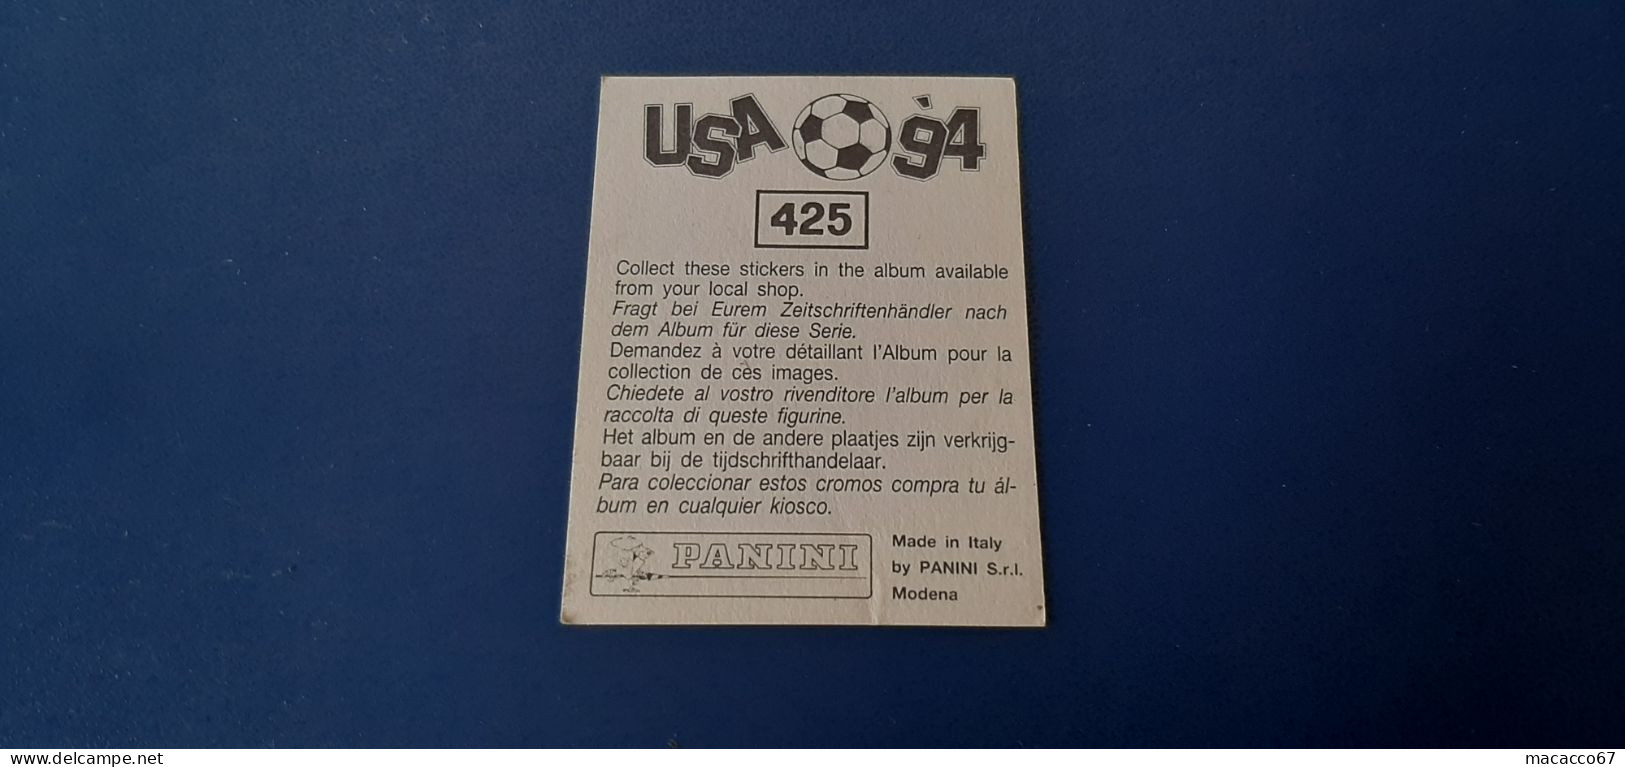 Figurina Panini WM USA 94 - 425 Jonk Olanda - Edición Italiana